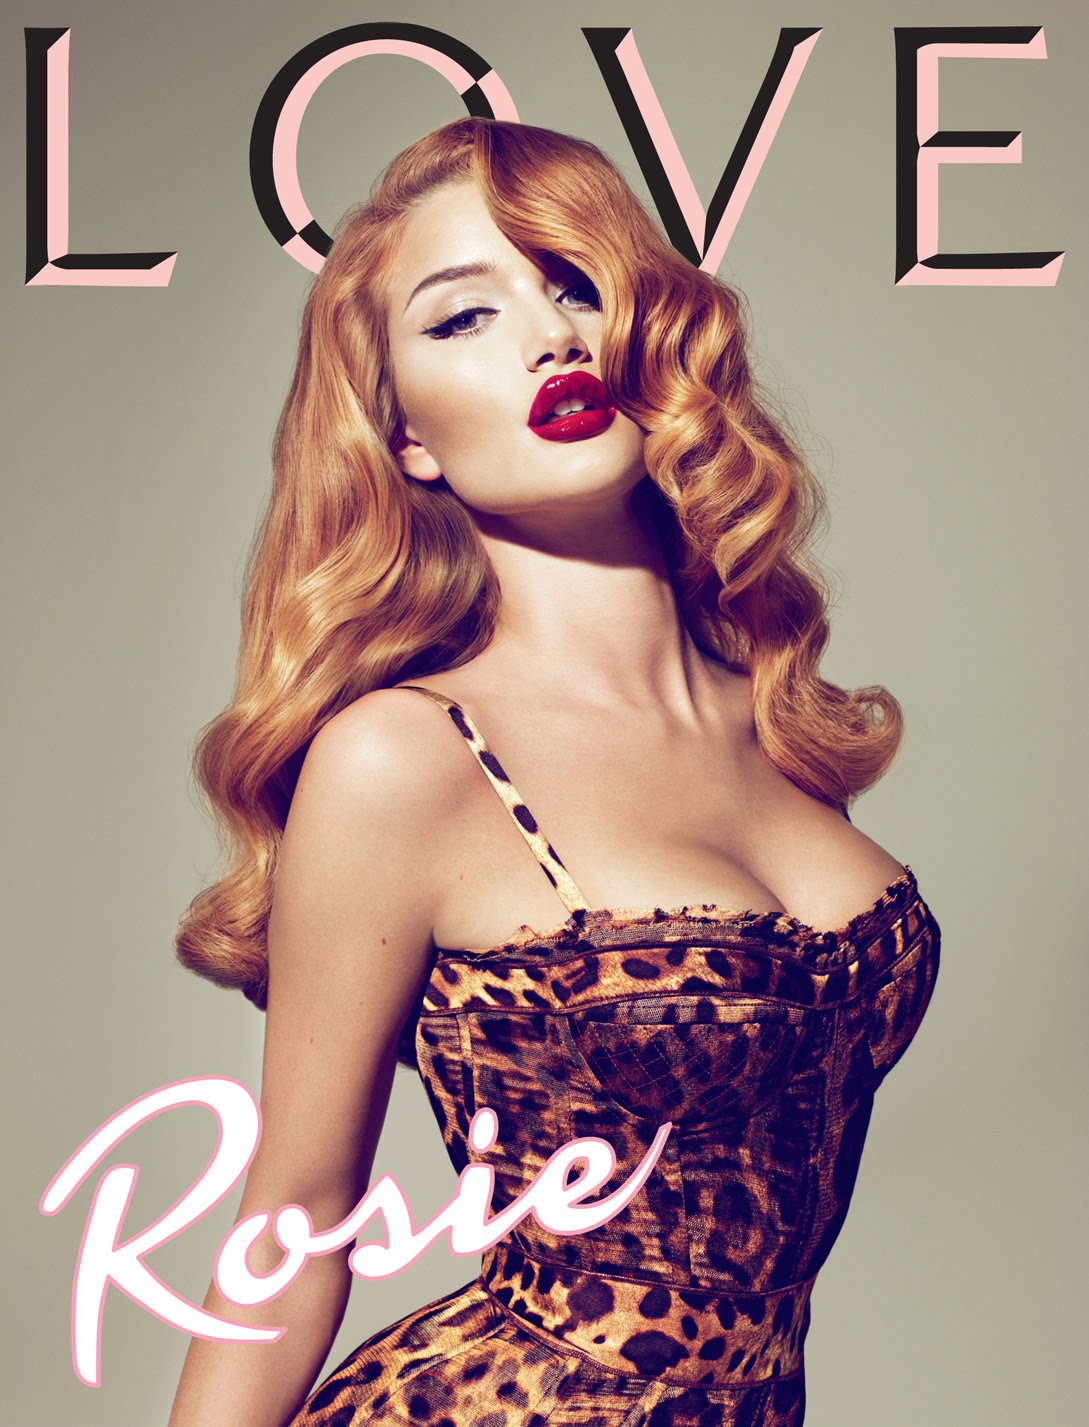 http://3.bp.blogspot.com/__0t4IBGvSCE/THHQ6pLpMyI/AAAAAAAAAdg/w6LRCSxUM3I/s1600/moda+september+issue+love+magazine+cover+rosie+huntington-whiteley+1.jpg